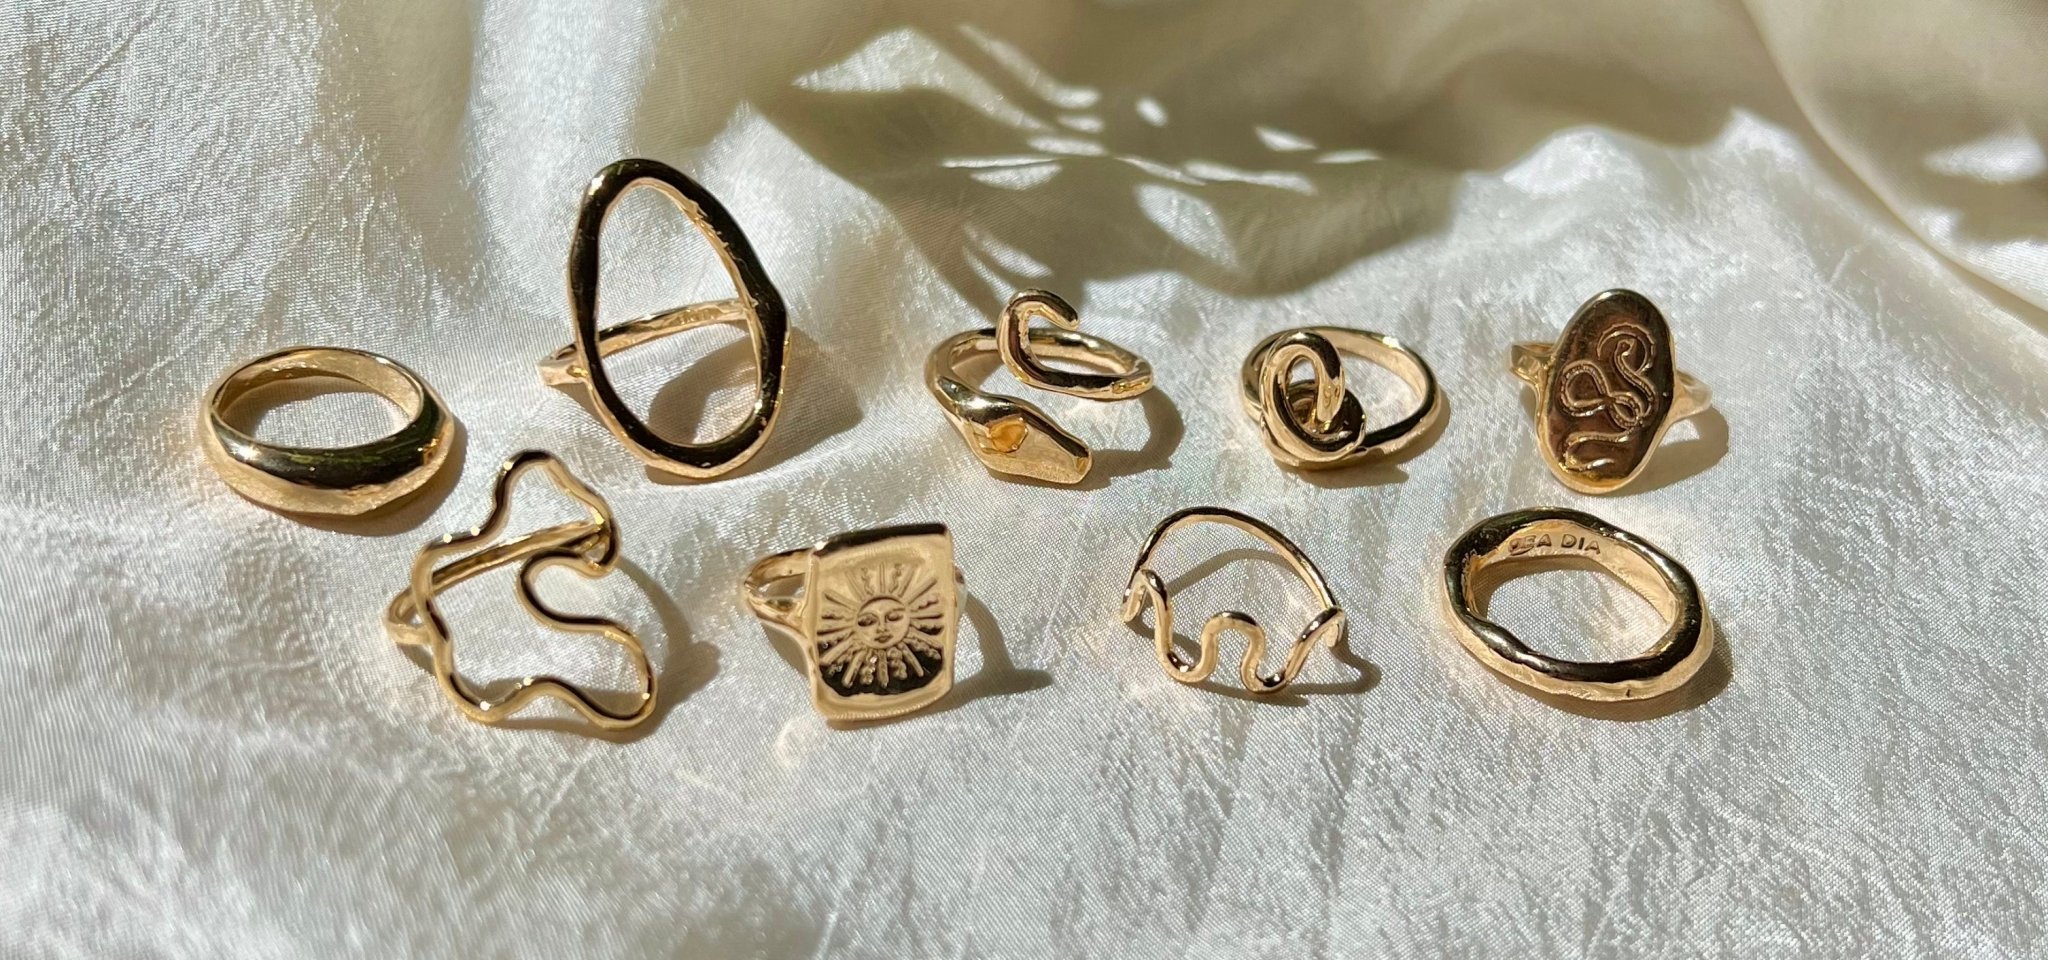 How to Clean Brass Jewelry - Dea Dia